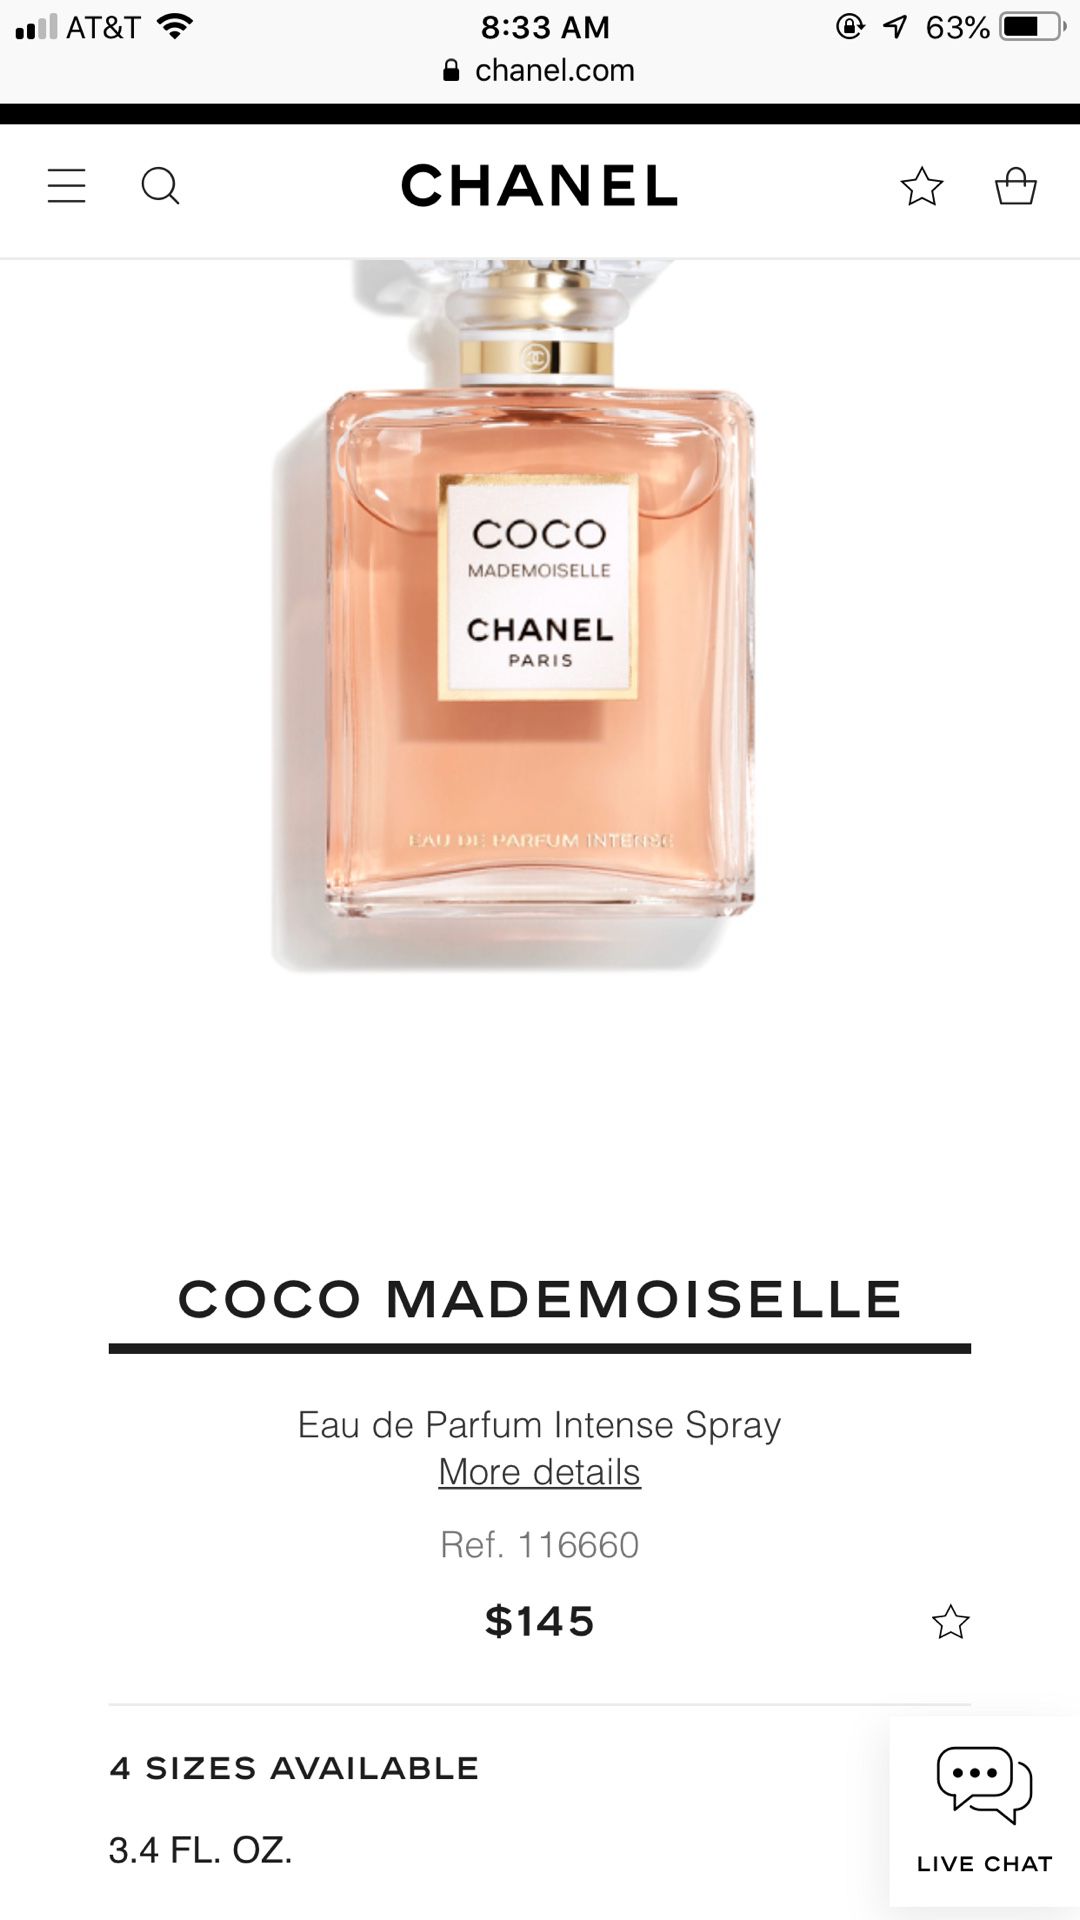 Chanel COCO mademoiselle perfume 3.4 fl oz